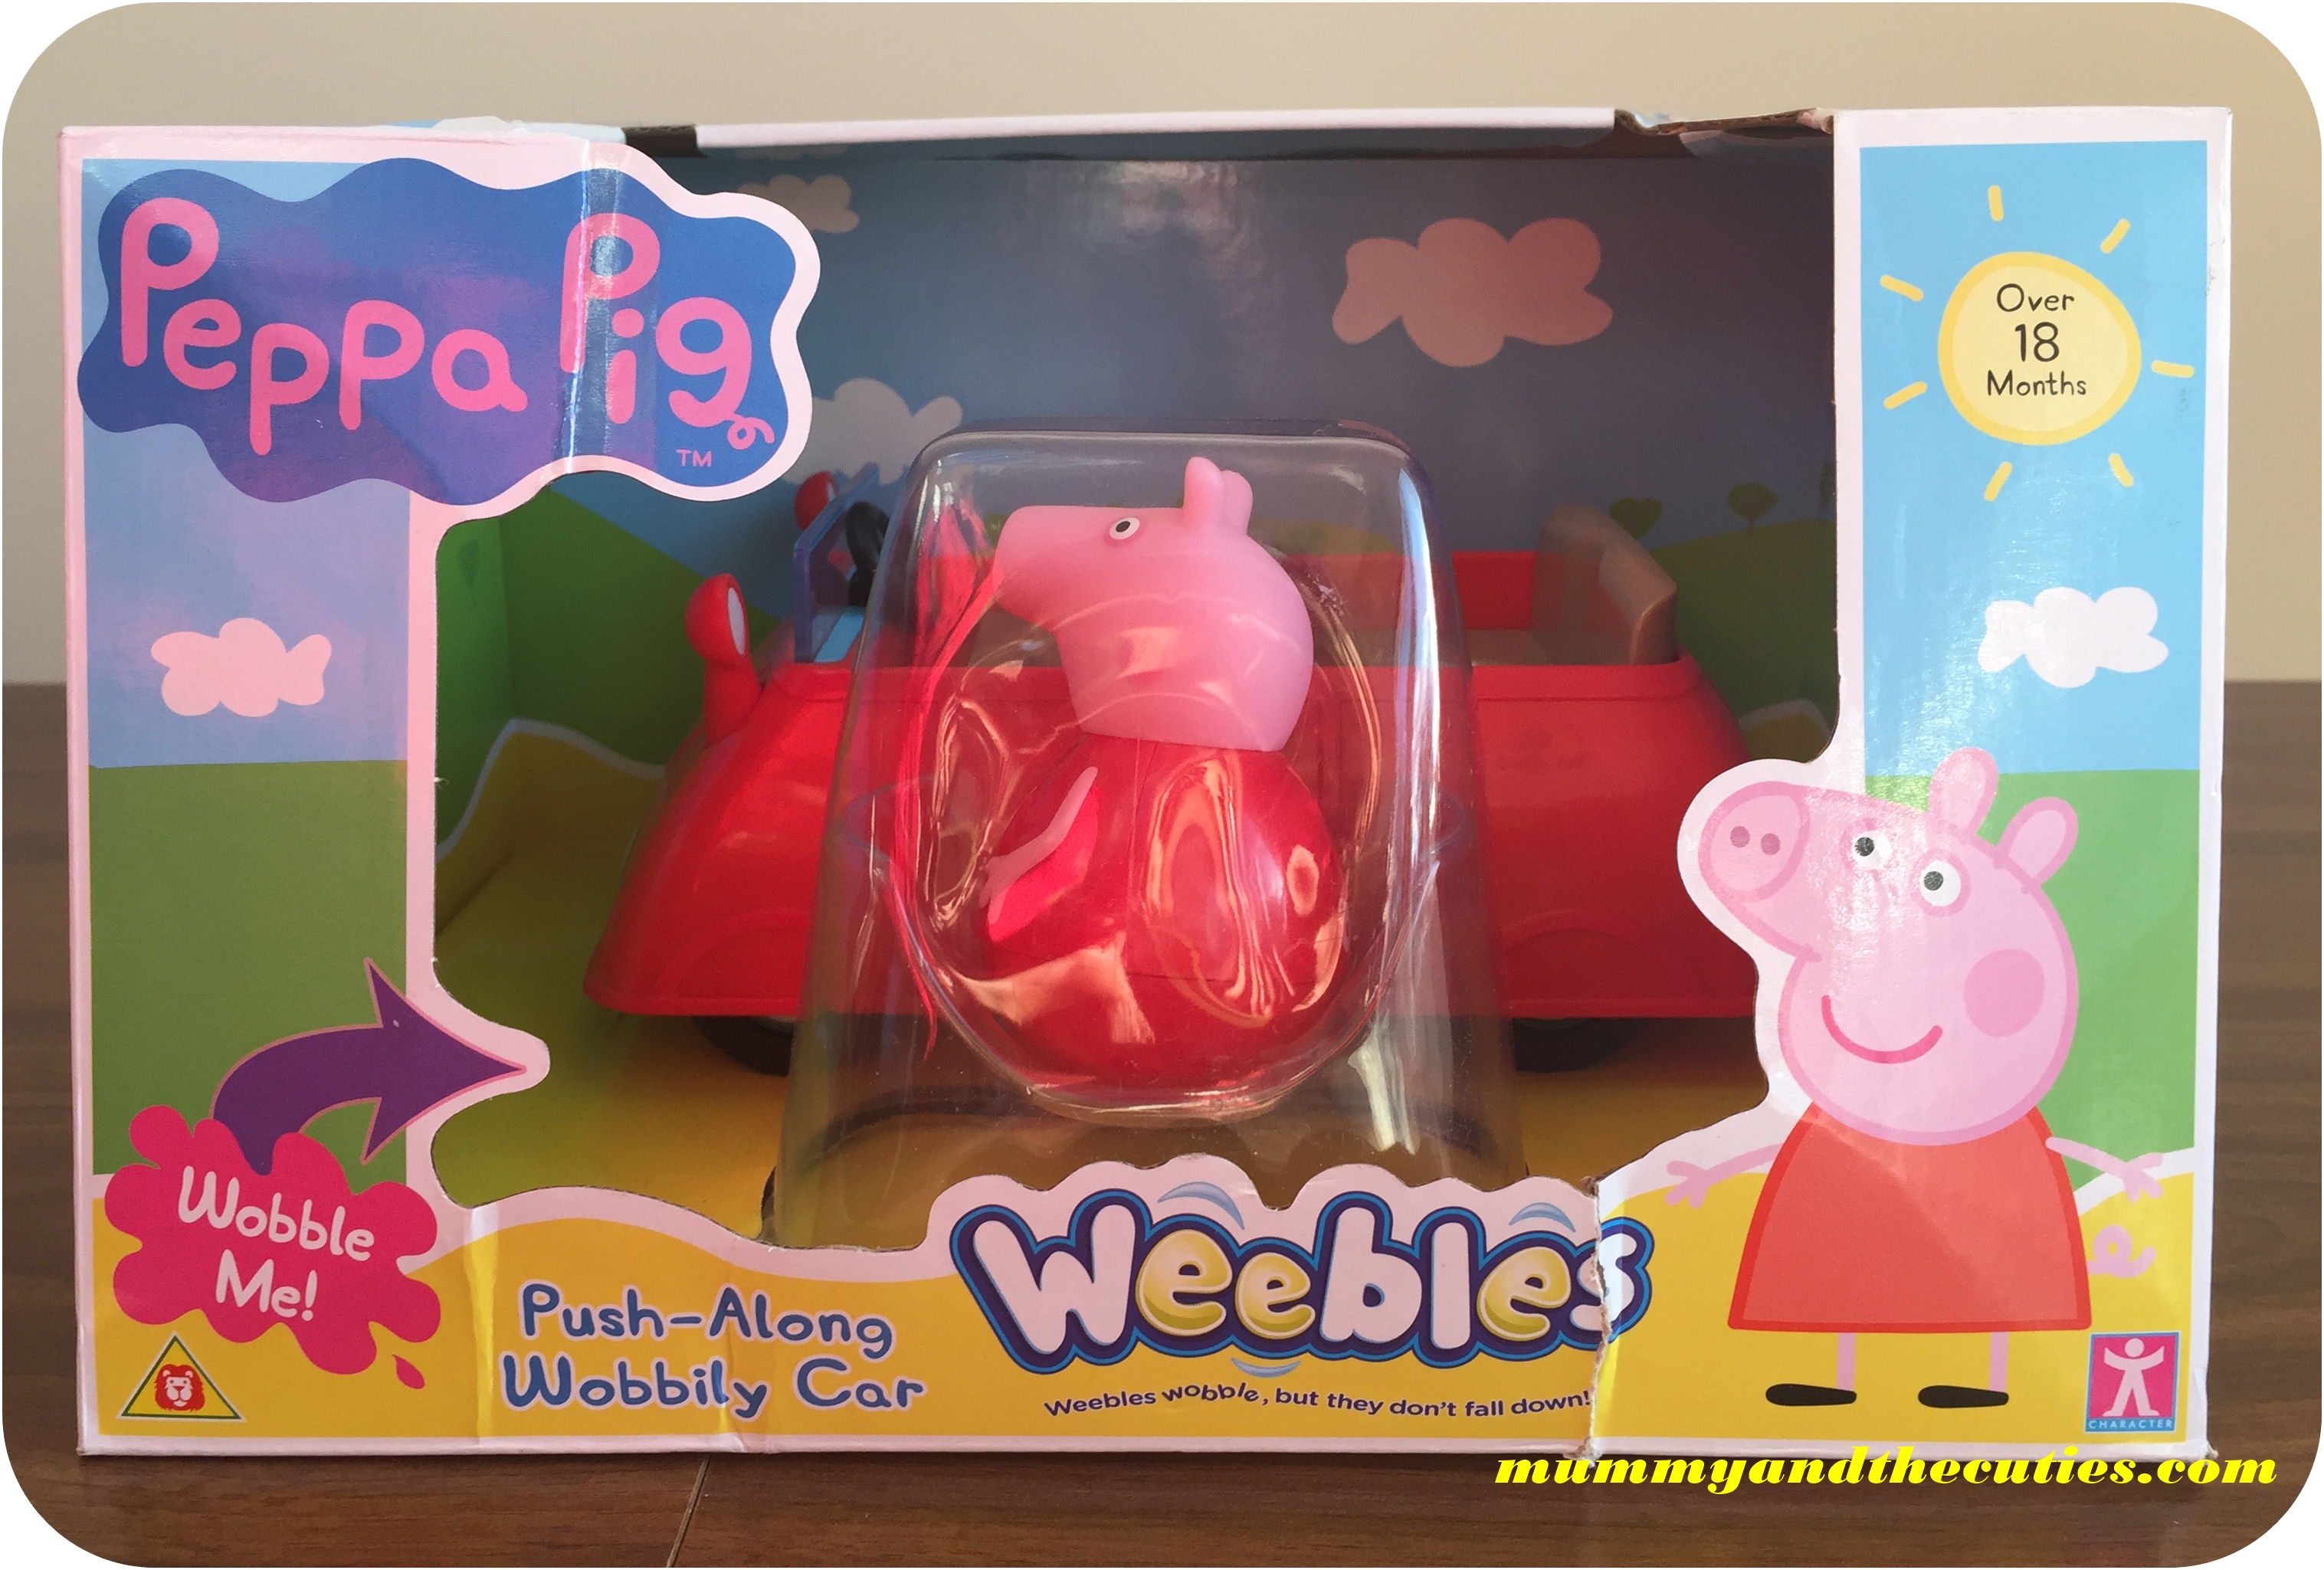 Peppa Pig Weebles Push Along Wobbily Car  – Review